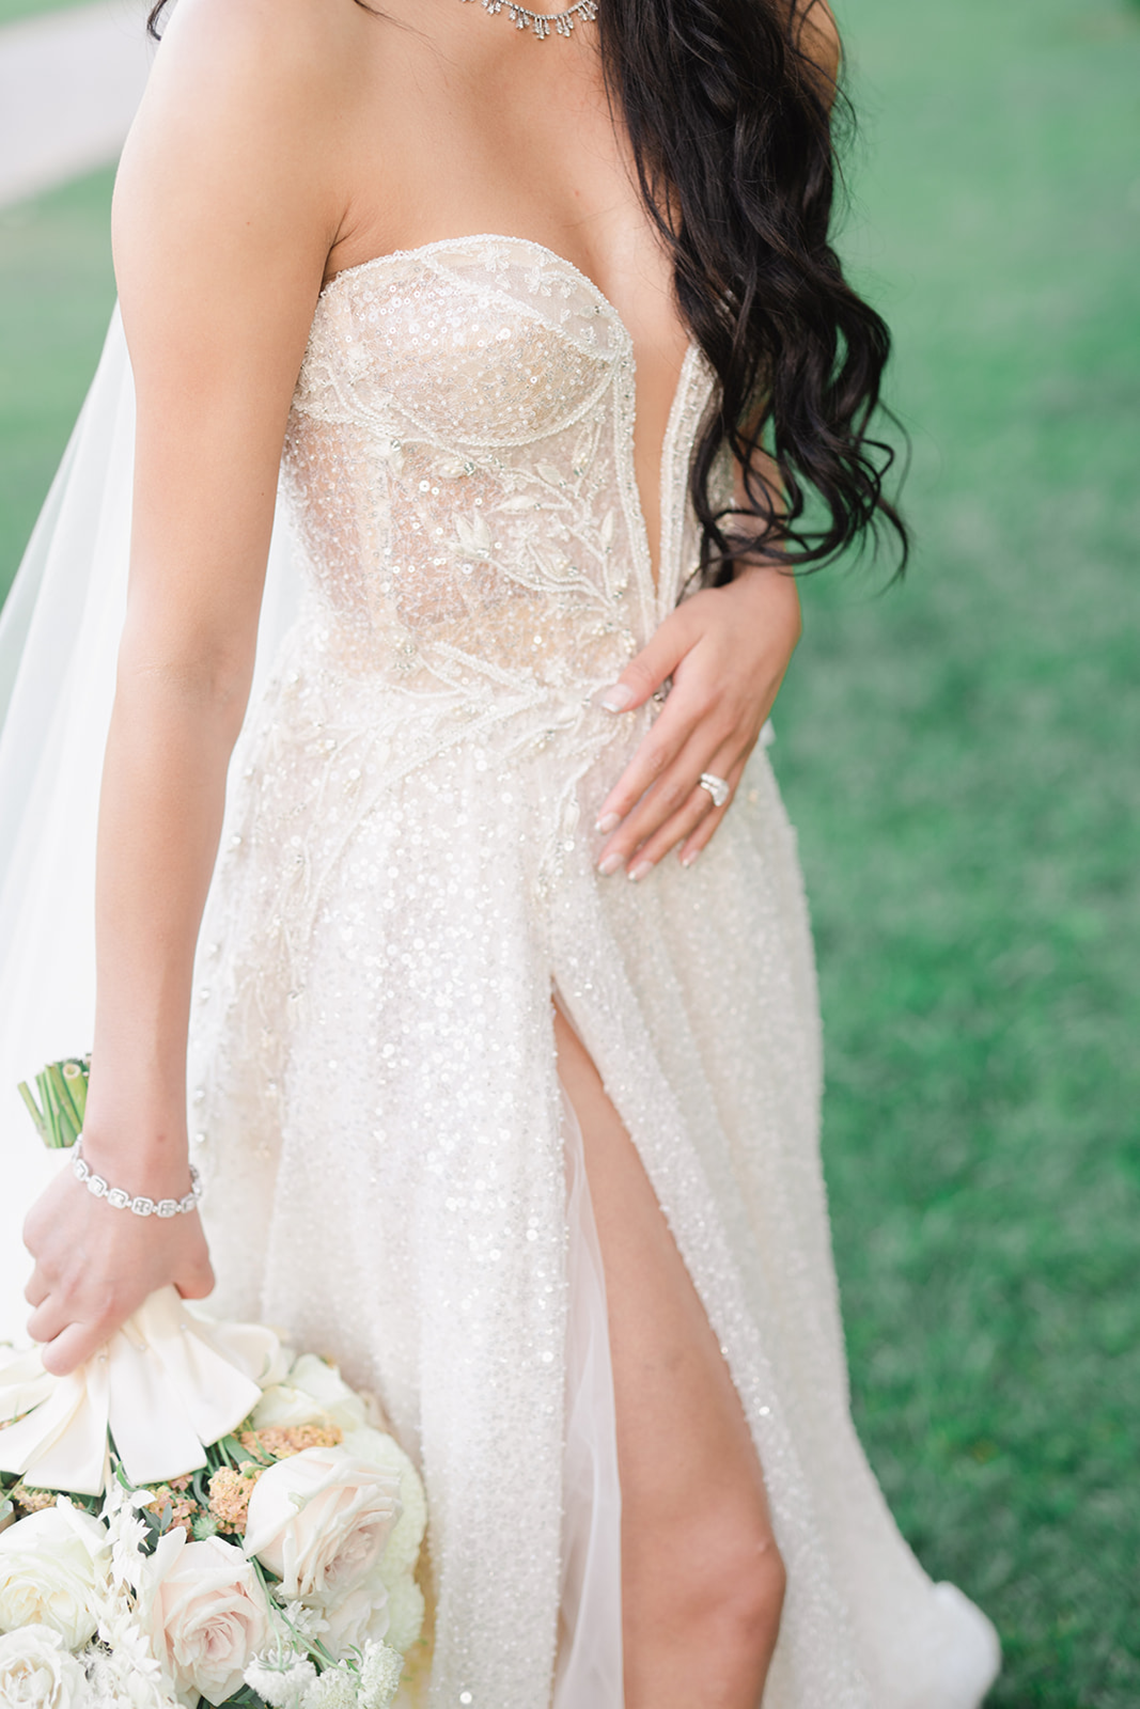 Boho Wedding With Pampas Grass – Netta Benshabu Wedding Dress – Michelle Flores Photography 21